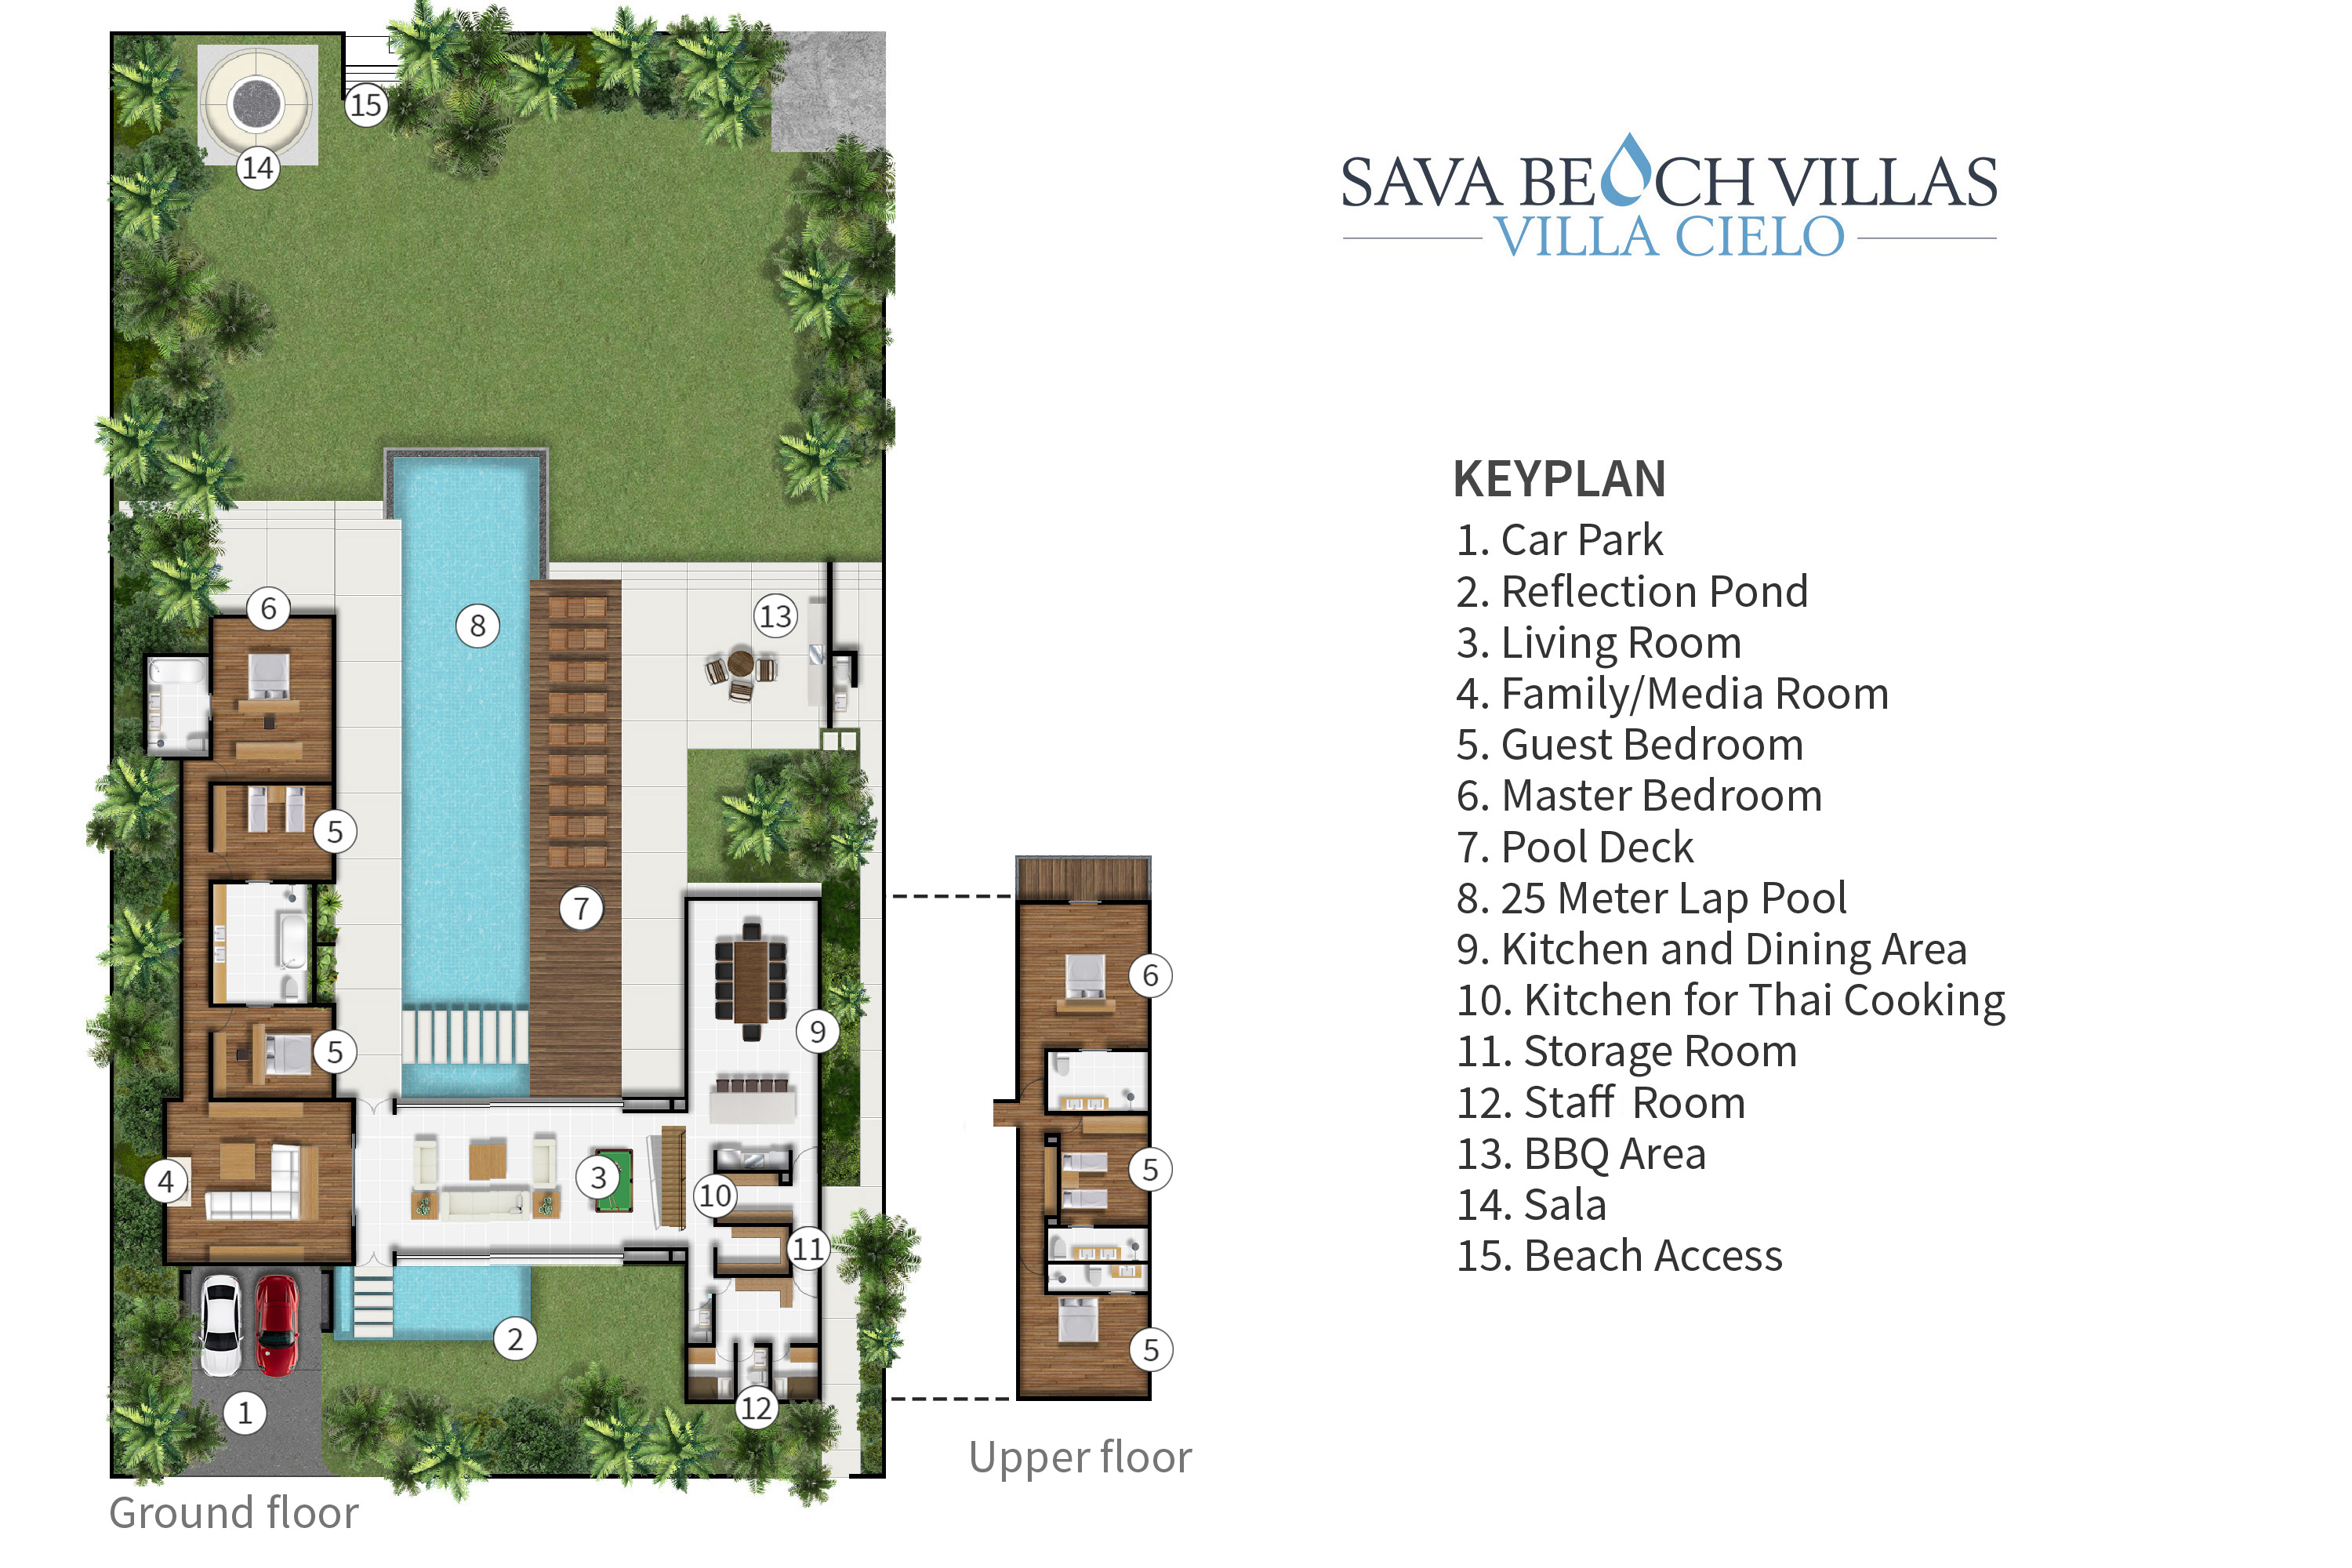 Sava Beach Villas - Villa Cielo